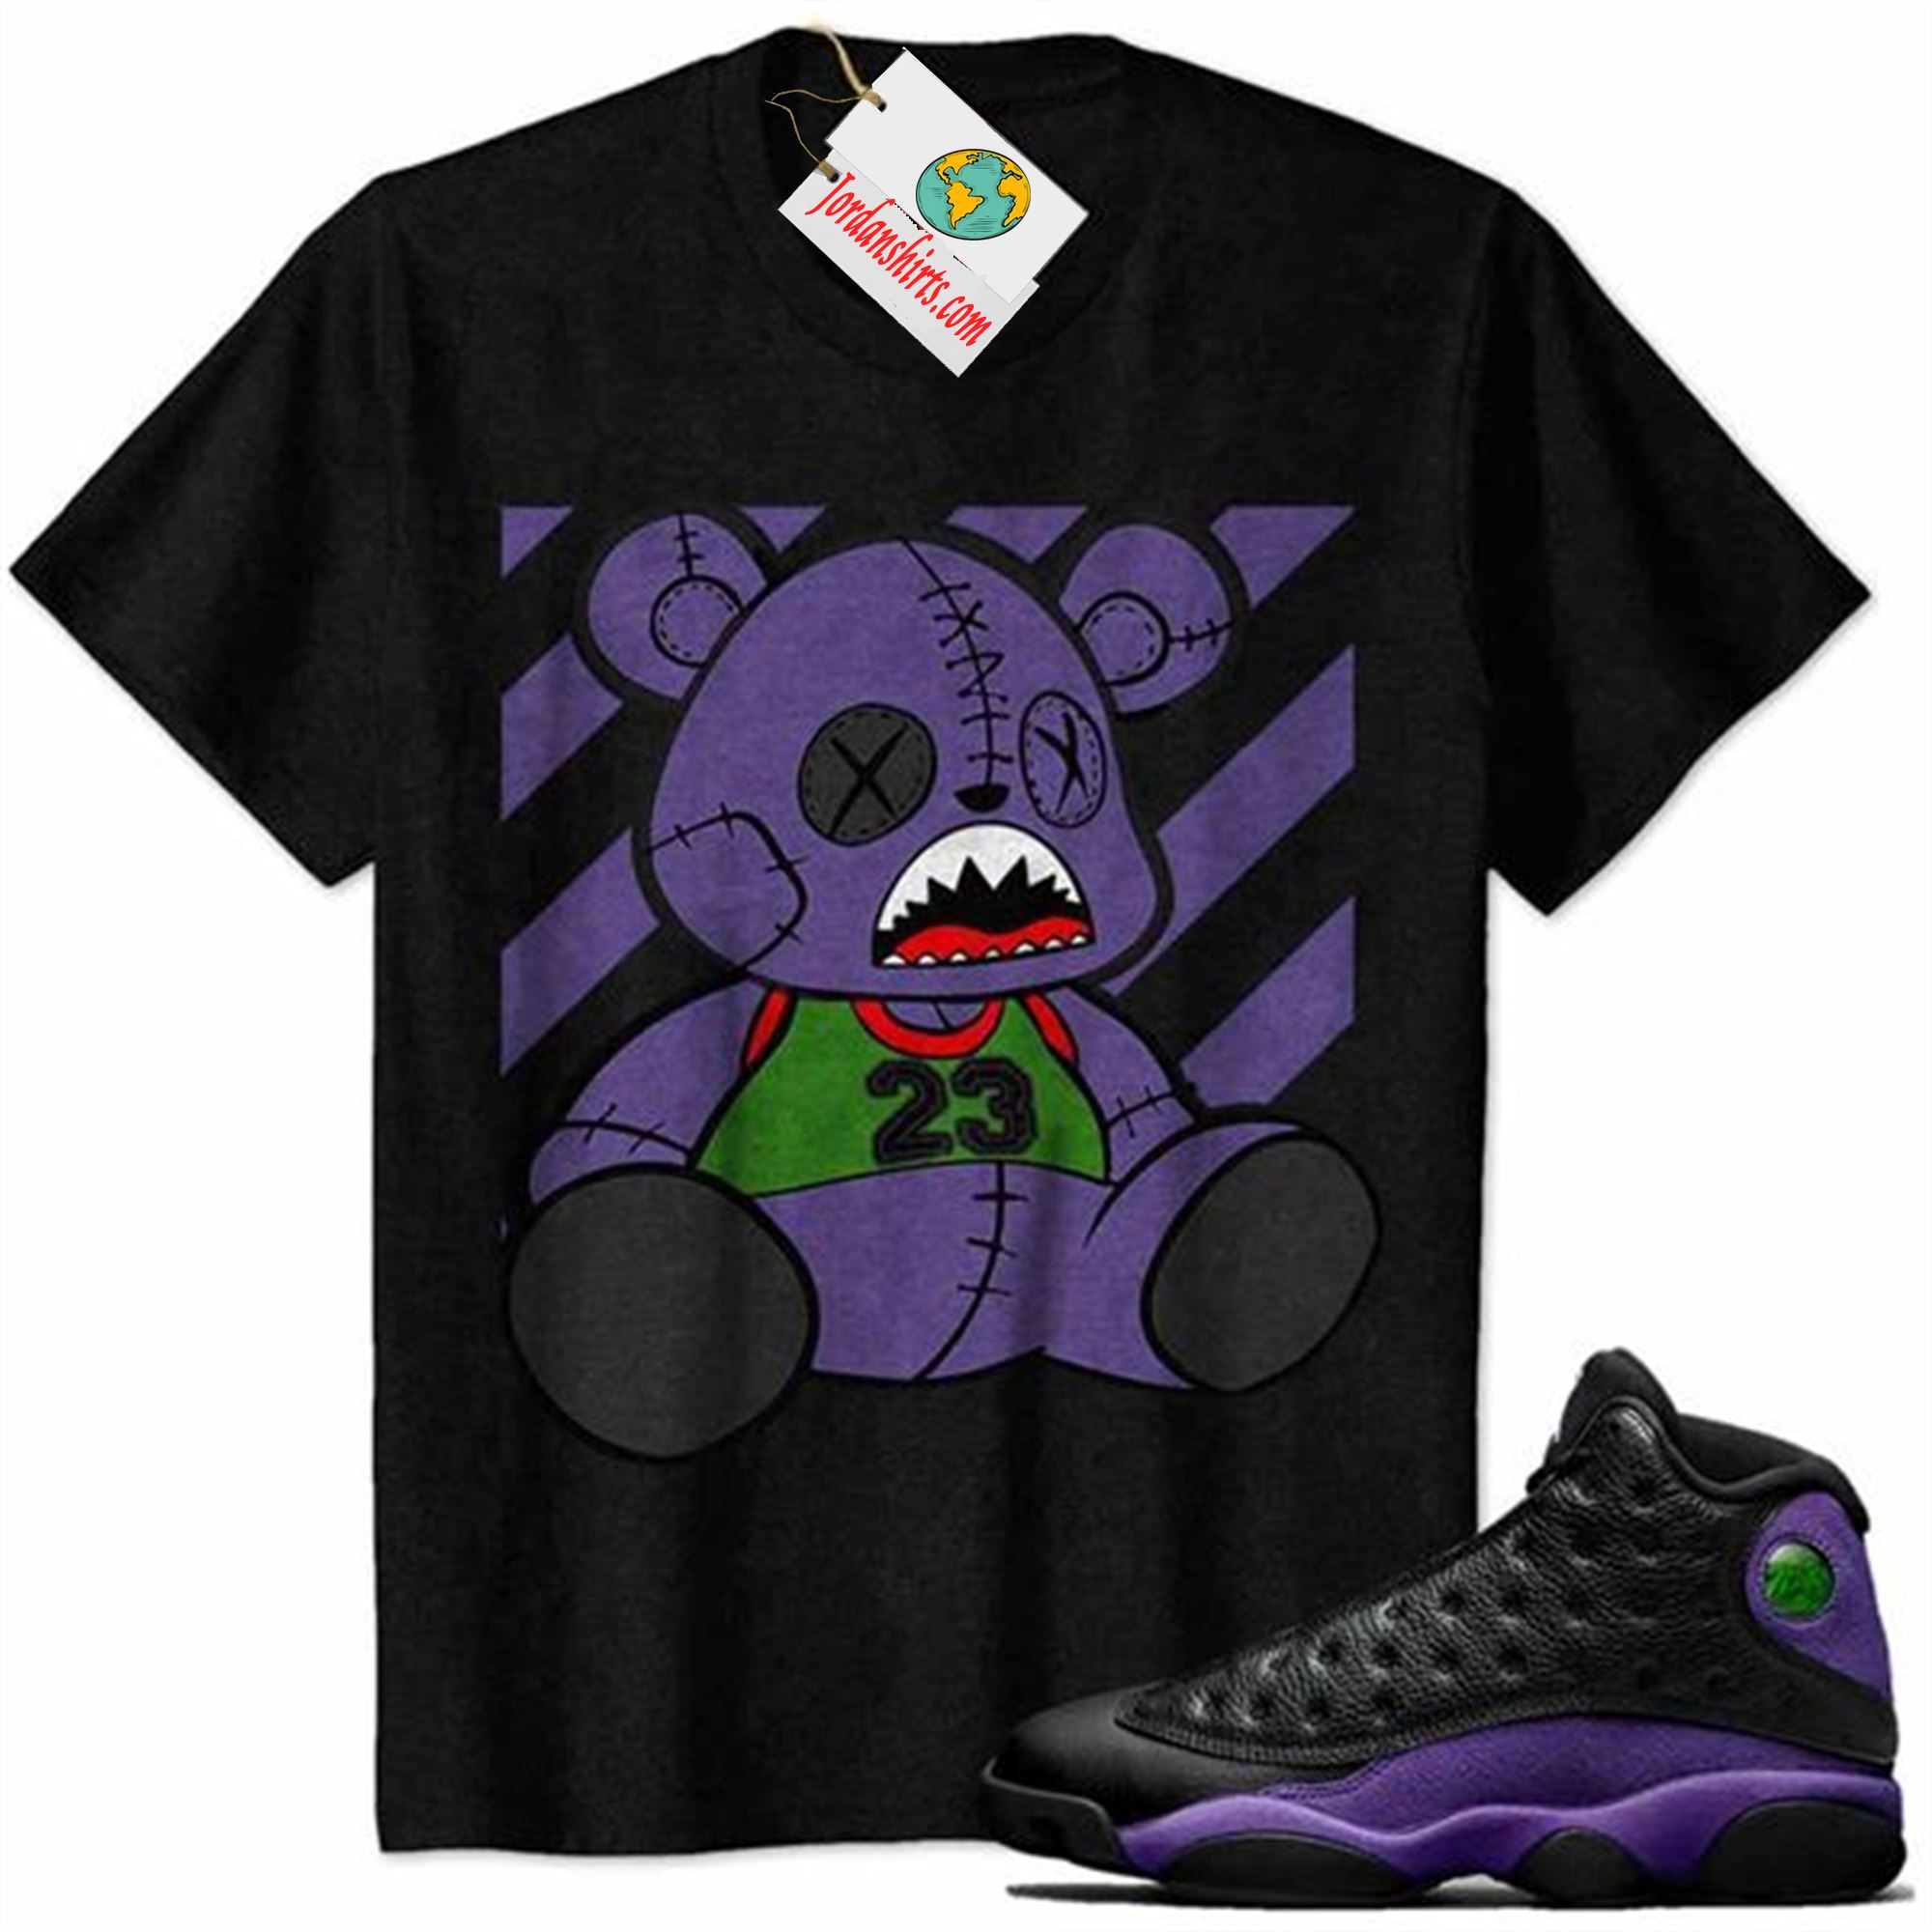 Jordan 13 Shirt, 23 Teddy Black Air Jordan 13 Court Purple 13s Full Size Up To 5xl